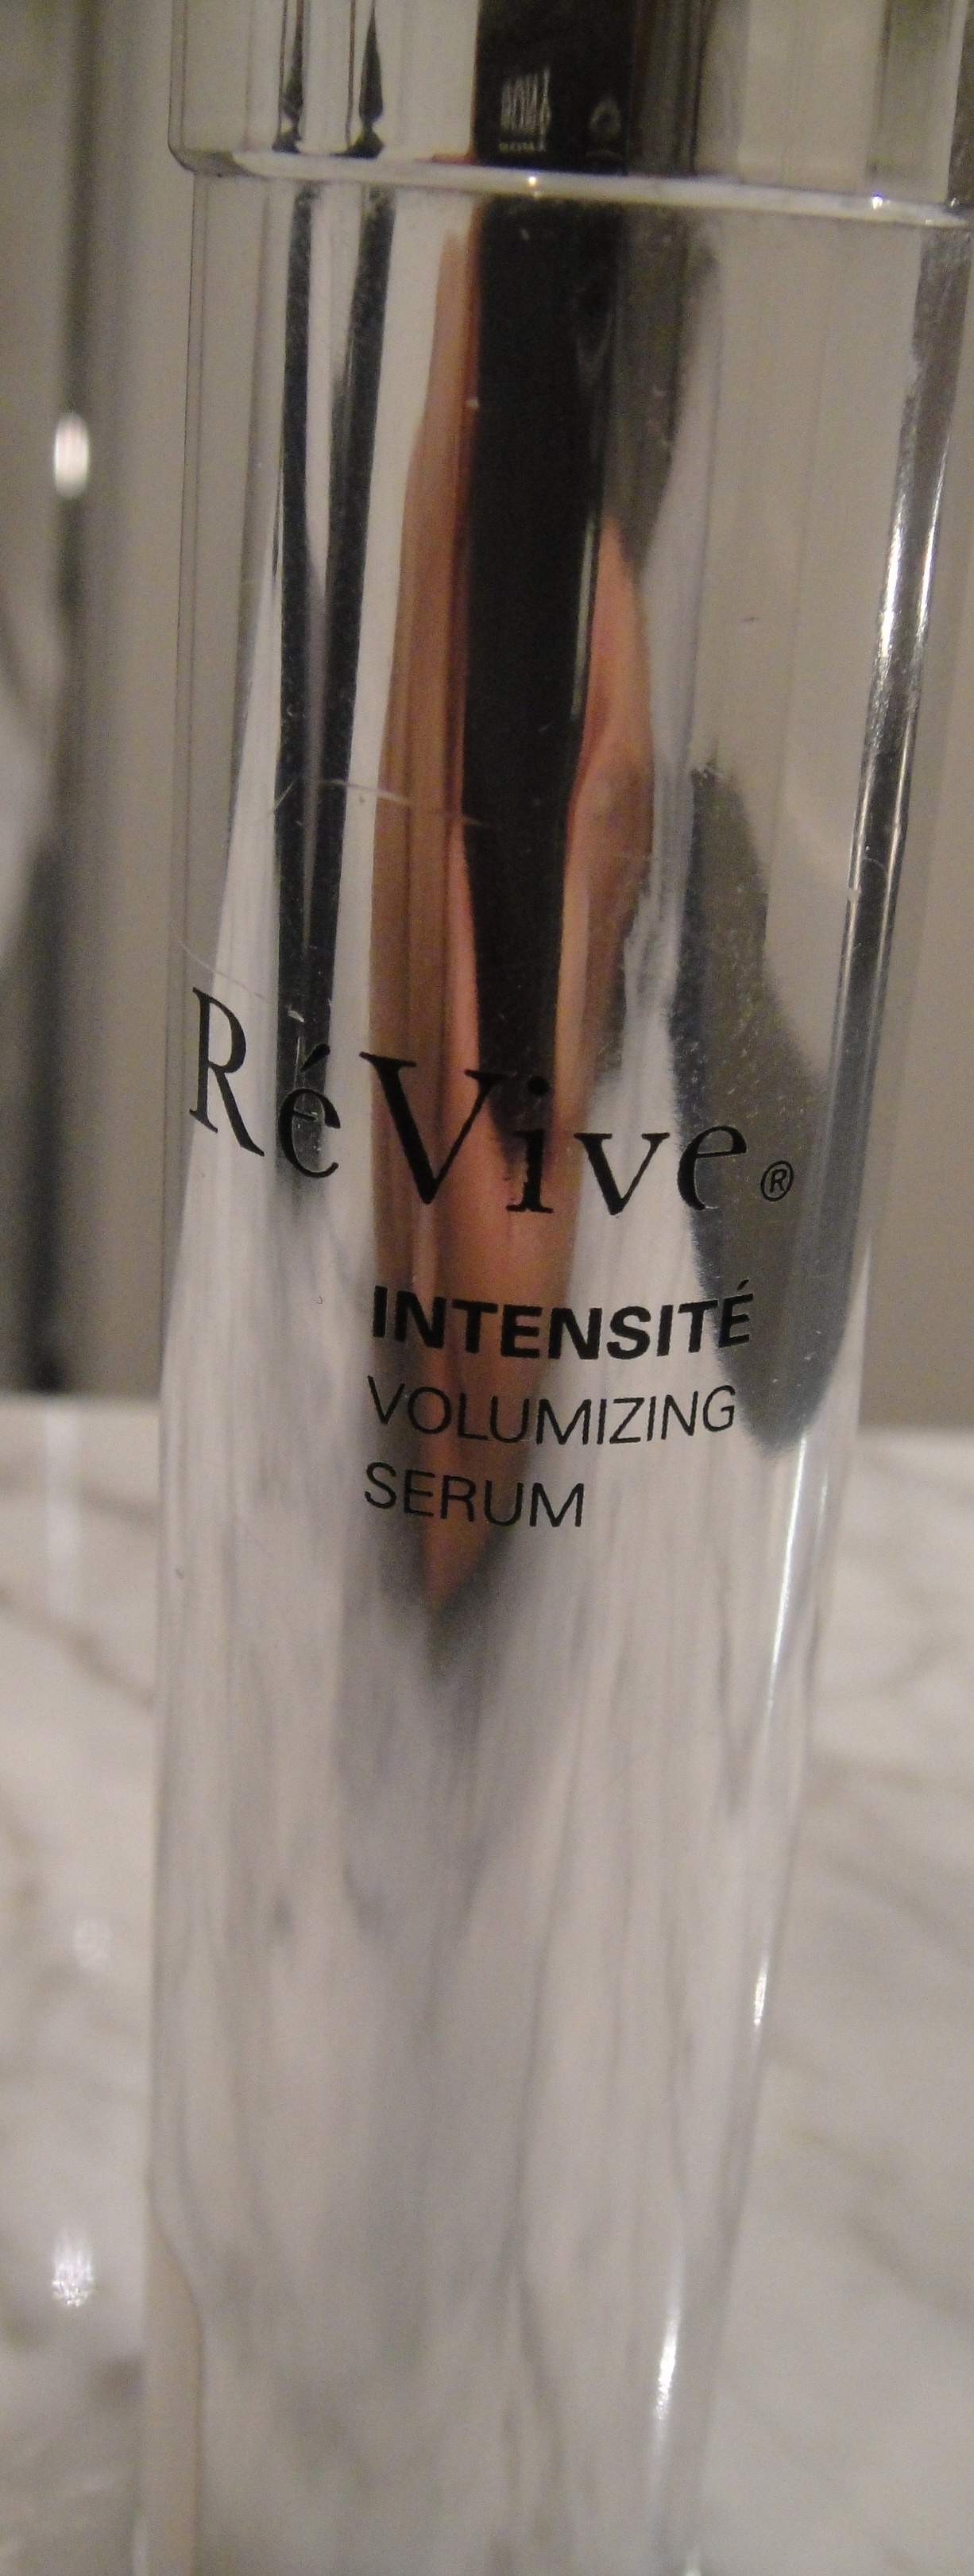 Step 3: Re Vive, Intensite Volumizing Serum